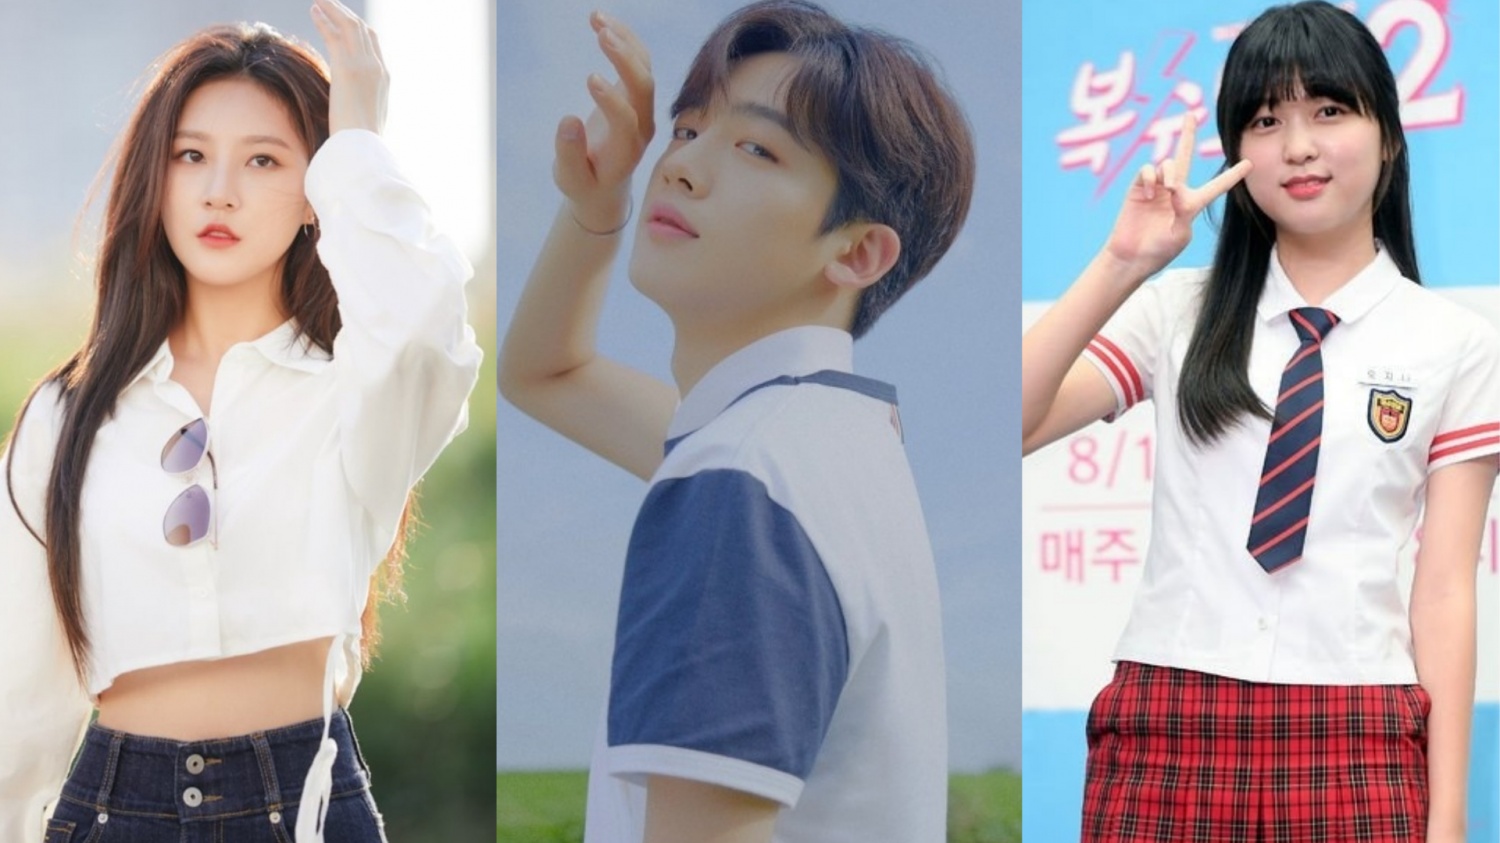 Did Kim Sae Ron Replace Ahn Seo Hyun as Yohan’s Co-Star in ‘School 2020’?